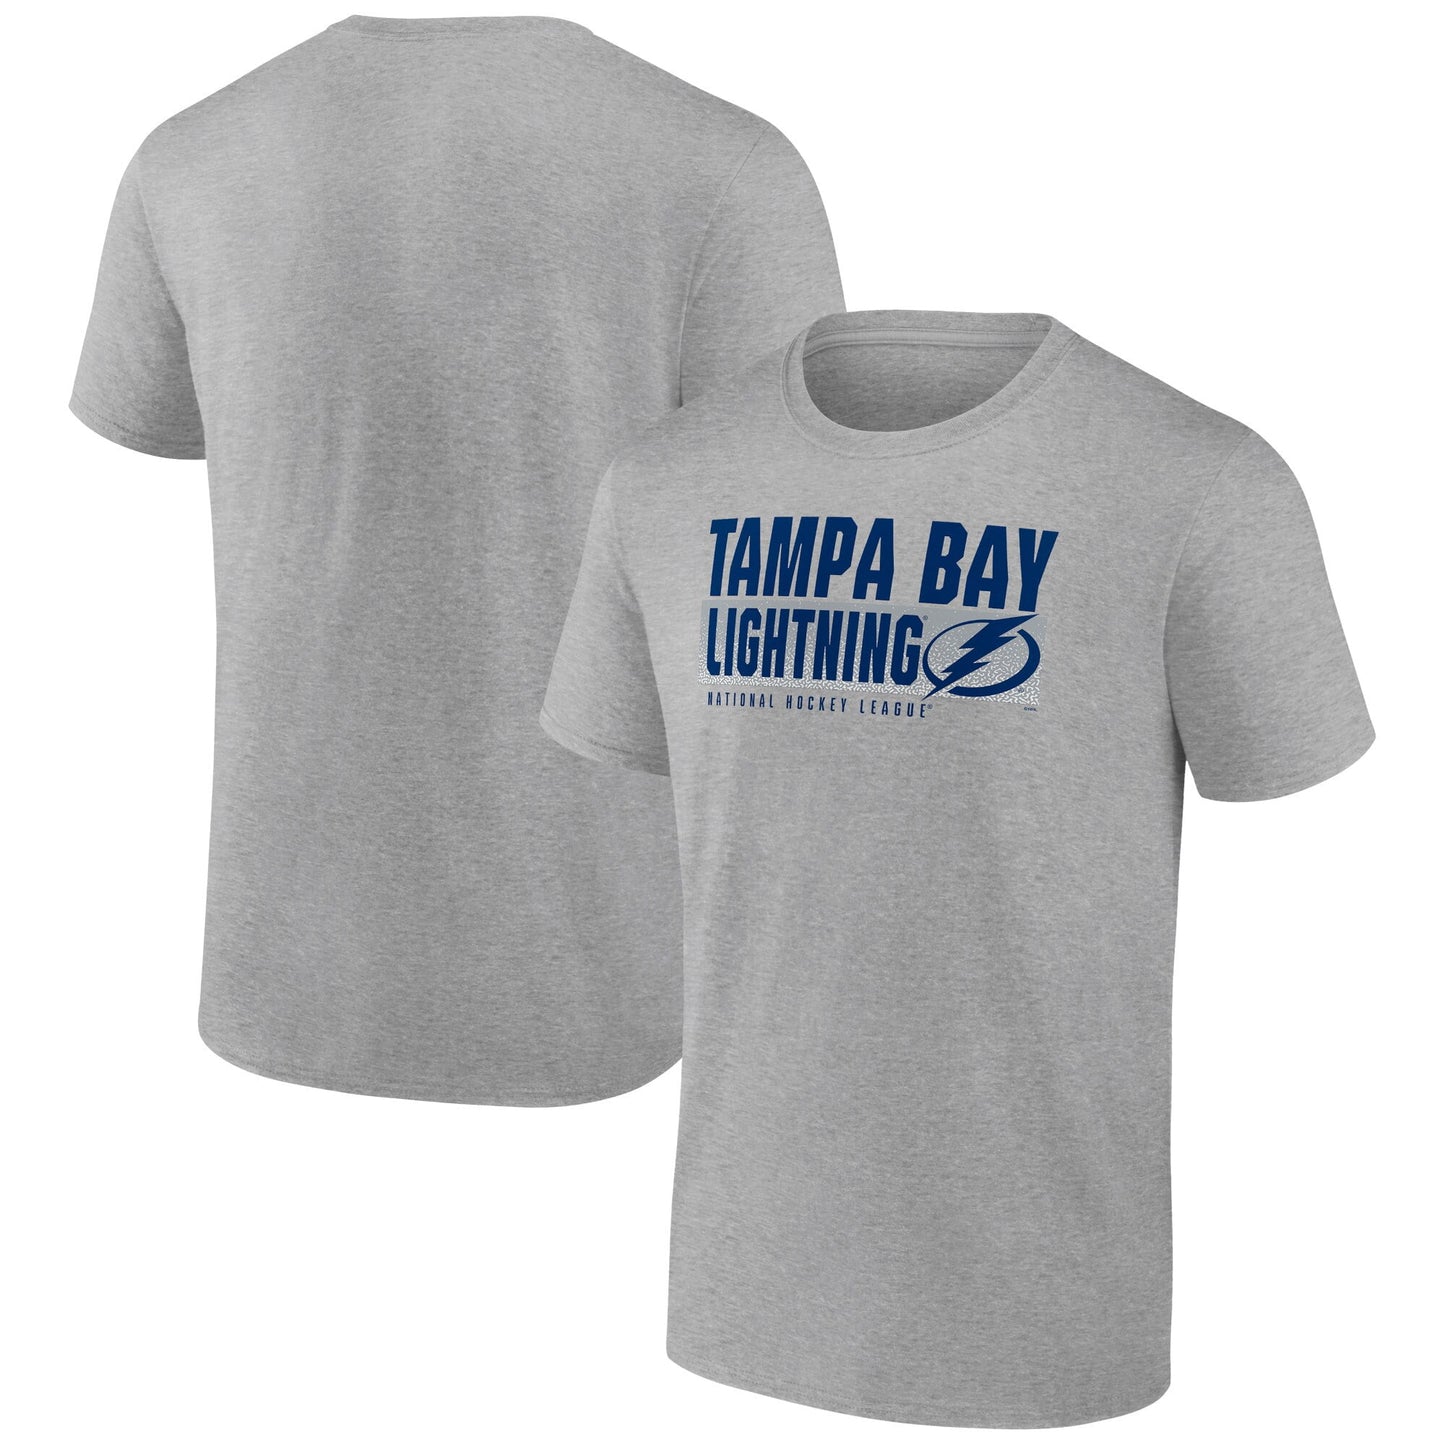 Men's Fanatics Branded Heathered Gray Tampa Bay Lightning Jet Speed T-Shirt